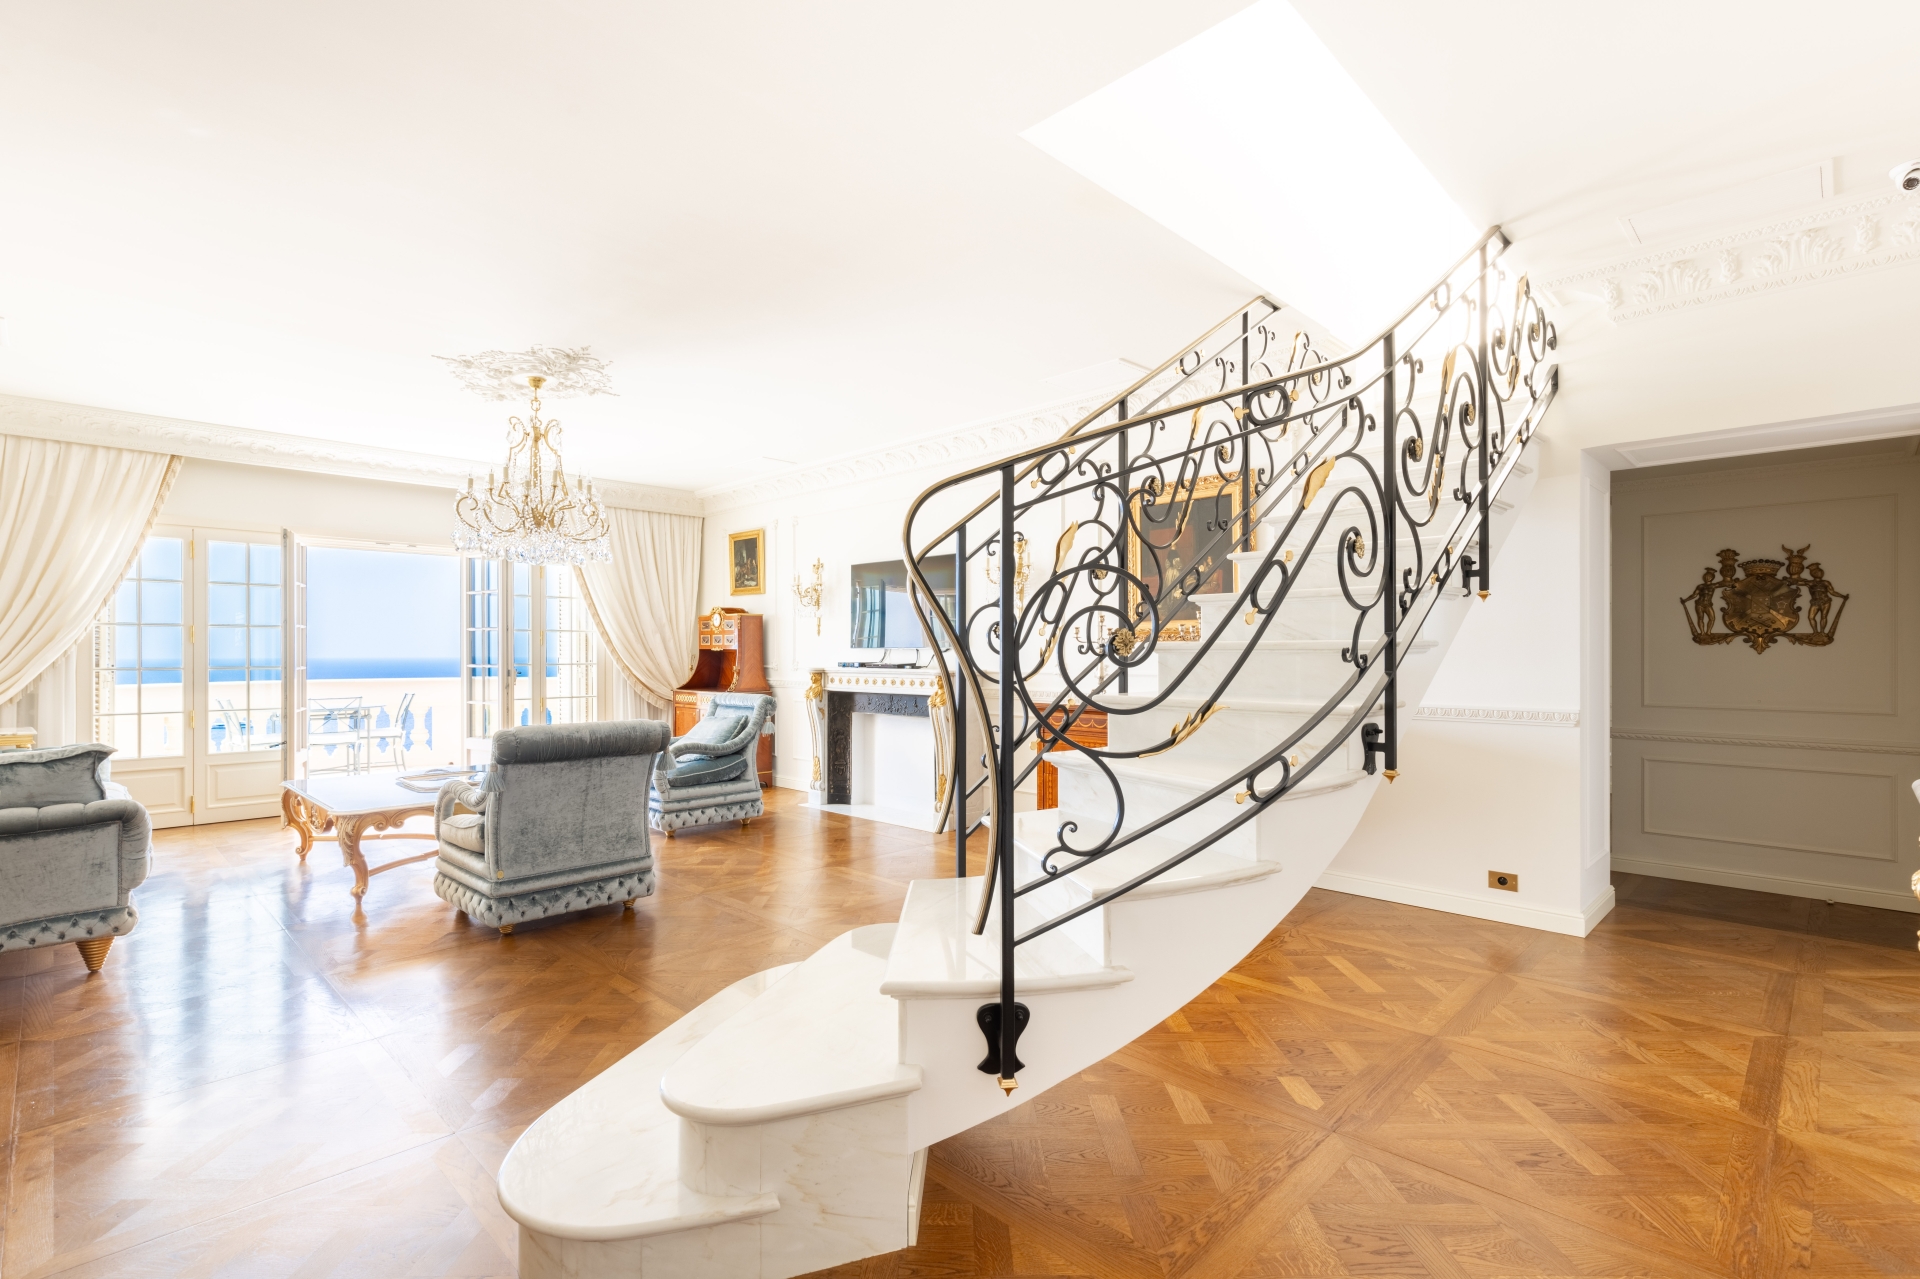 Dotta Appartement de 5 pieces a vendre - VILLA POULIDO - Roquebrune-Cap-Martin - img3